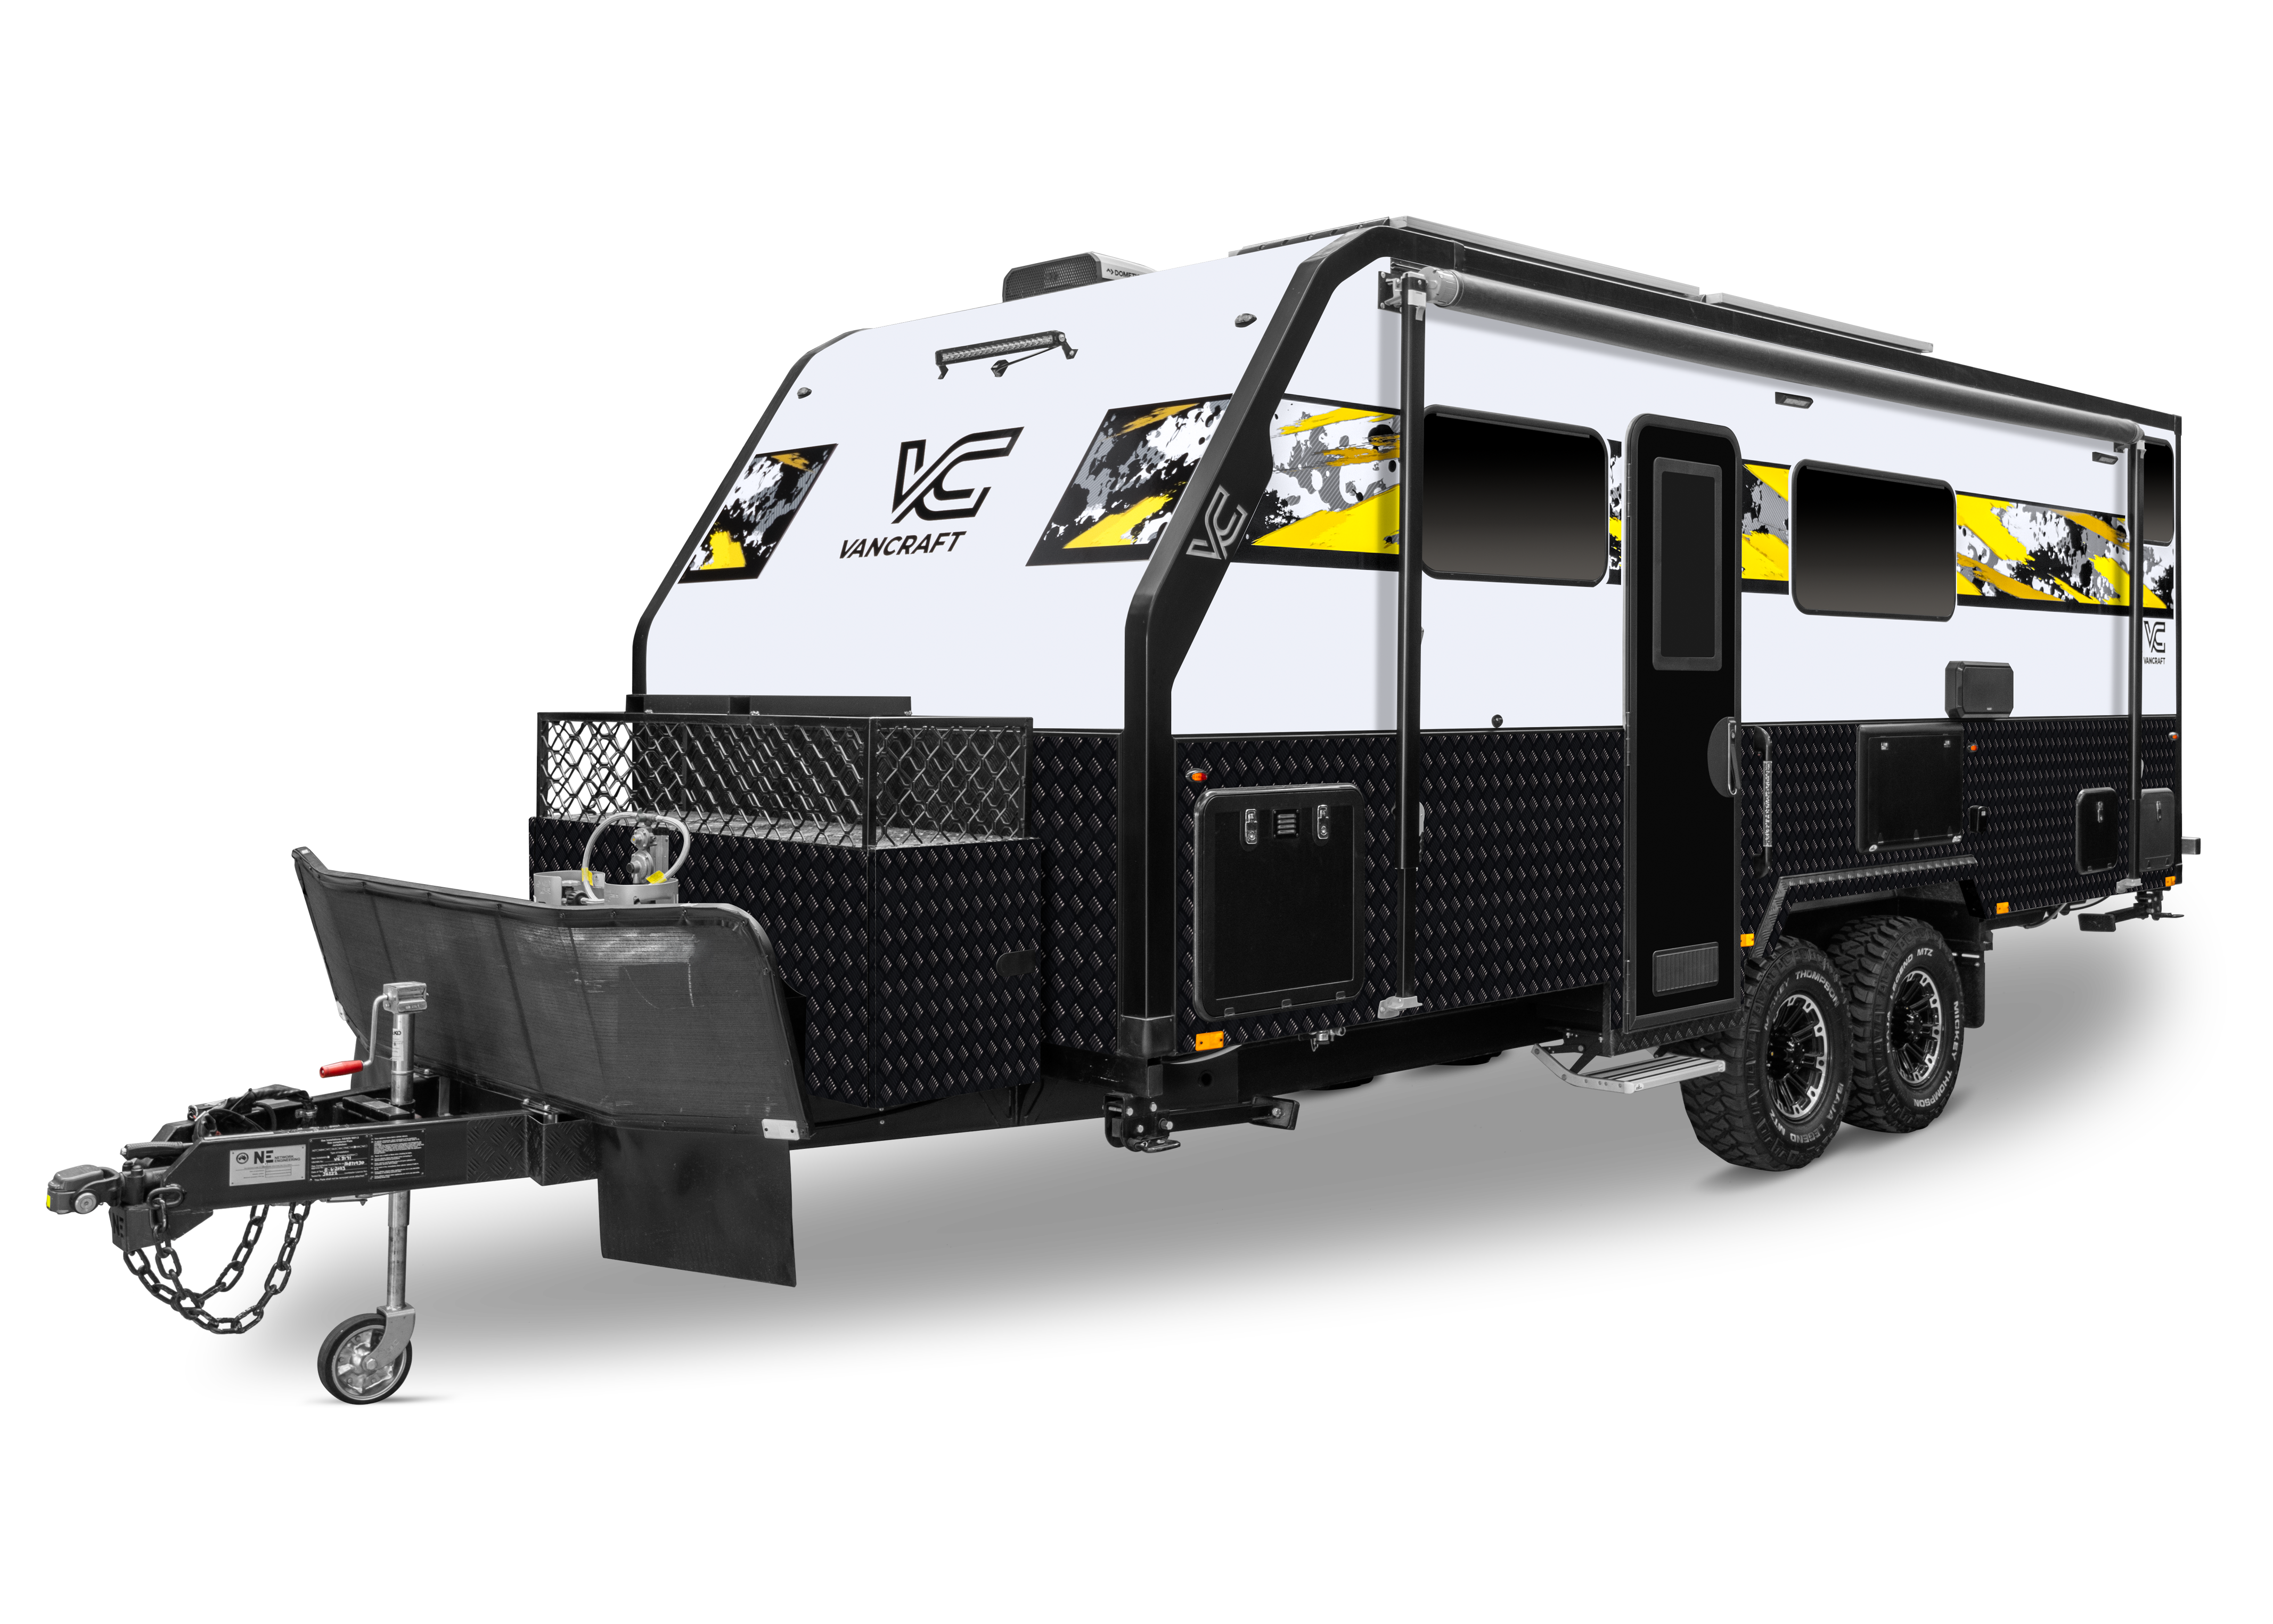 21FT Bunk - Network RV Caravans